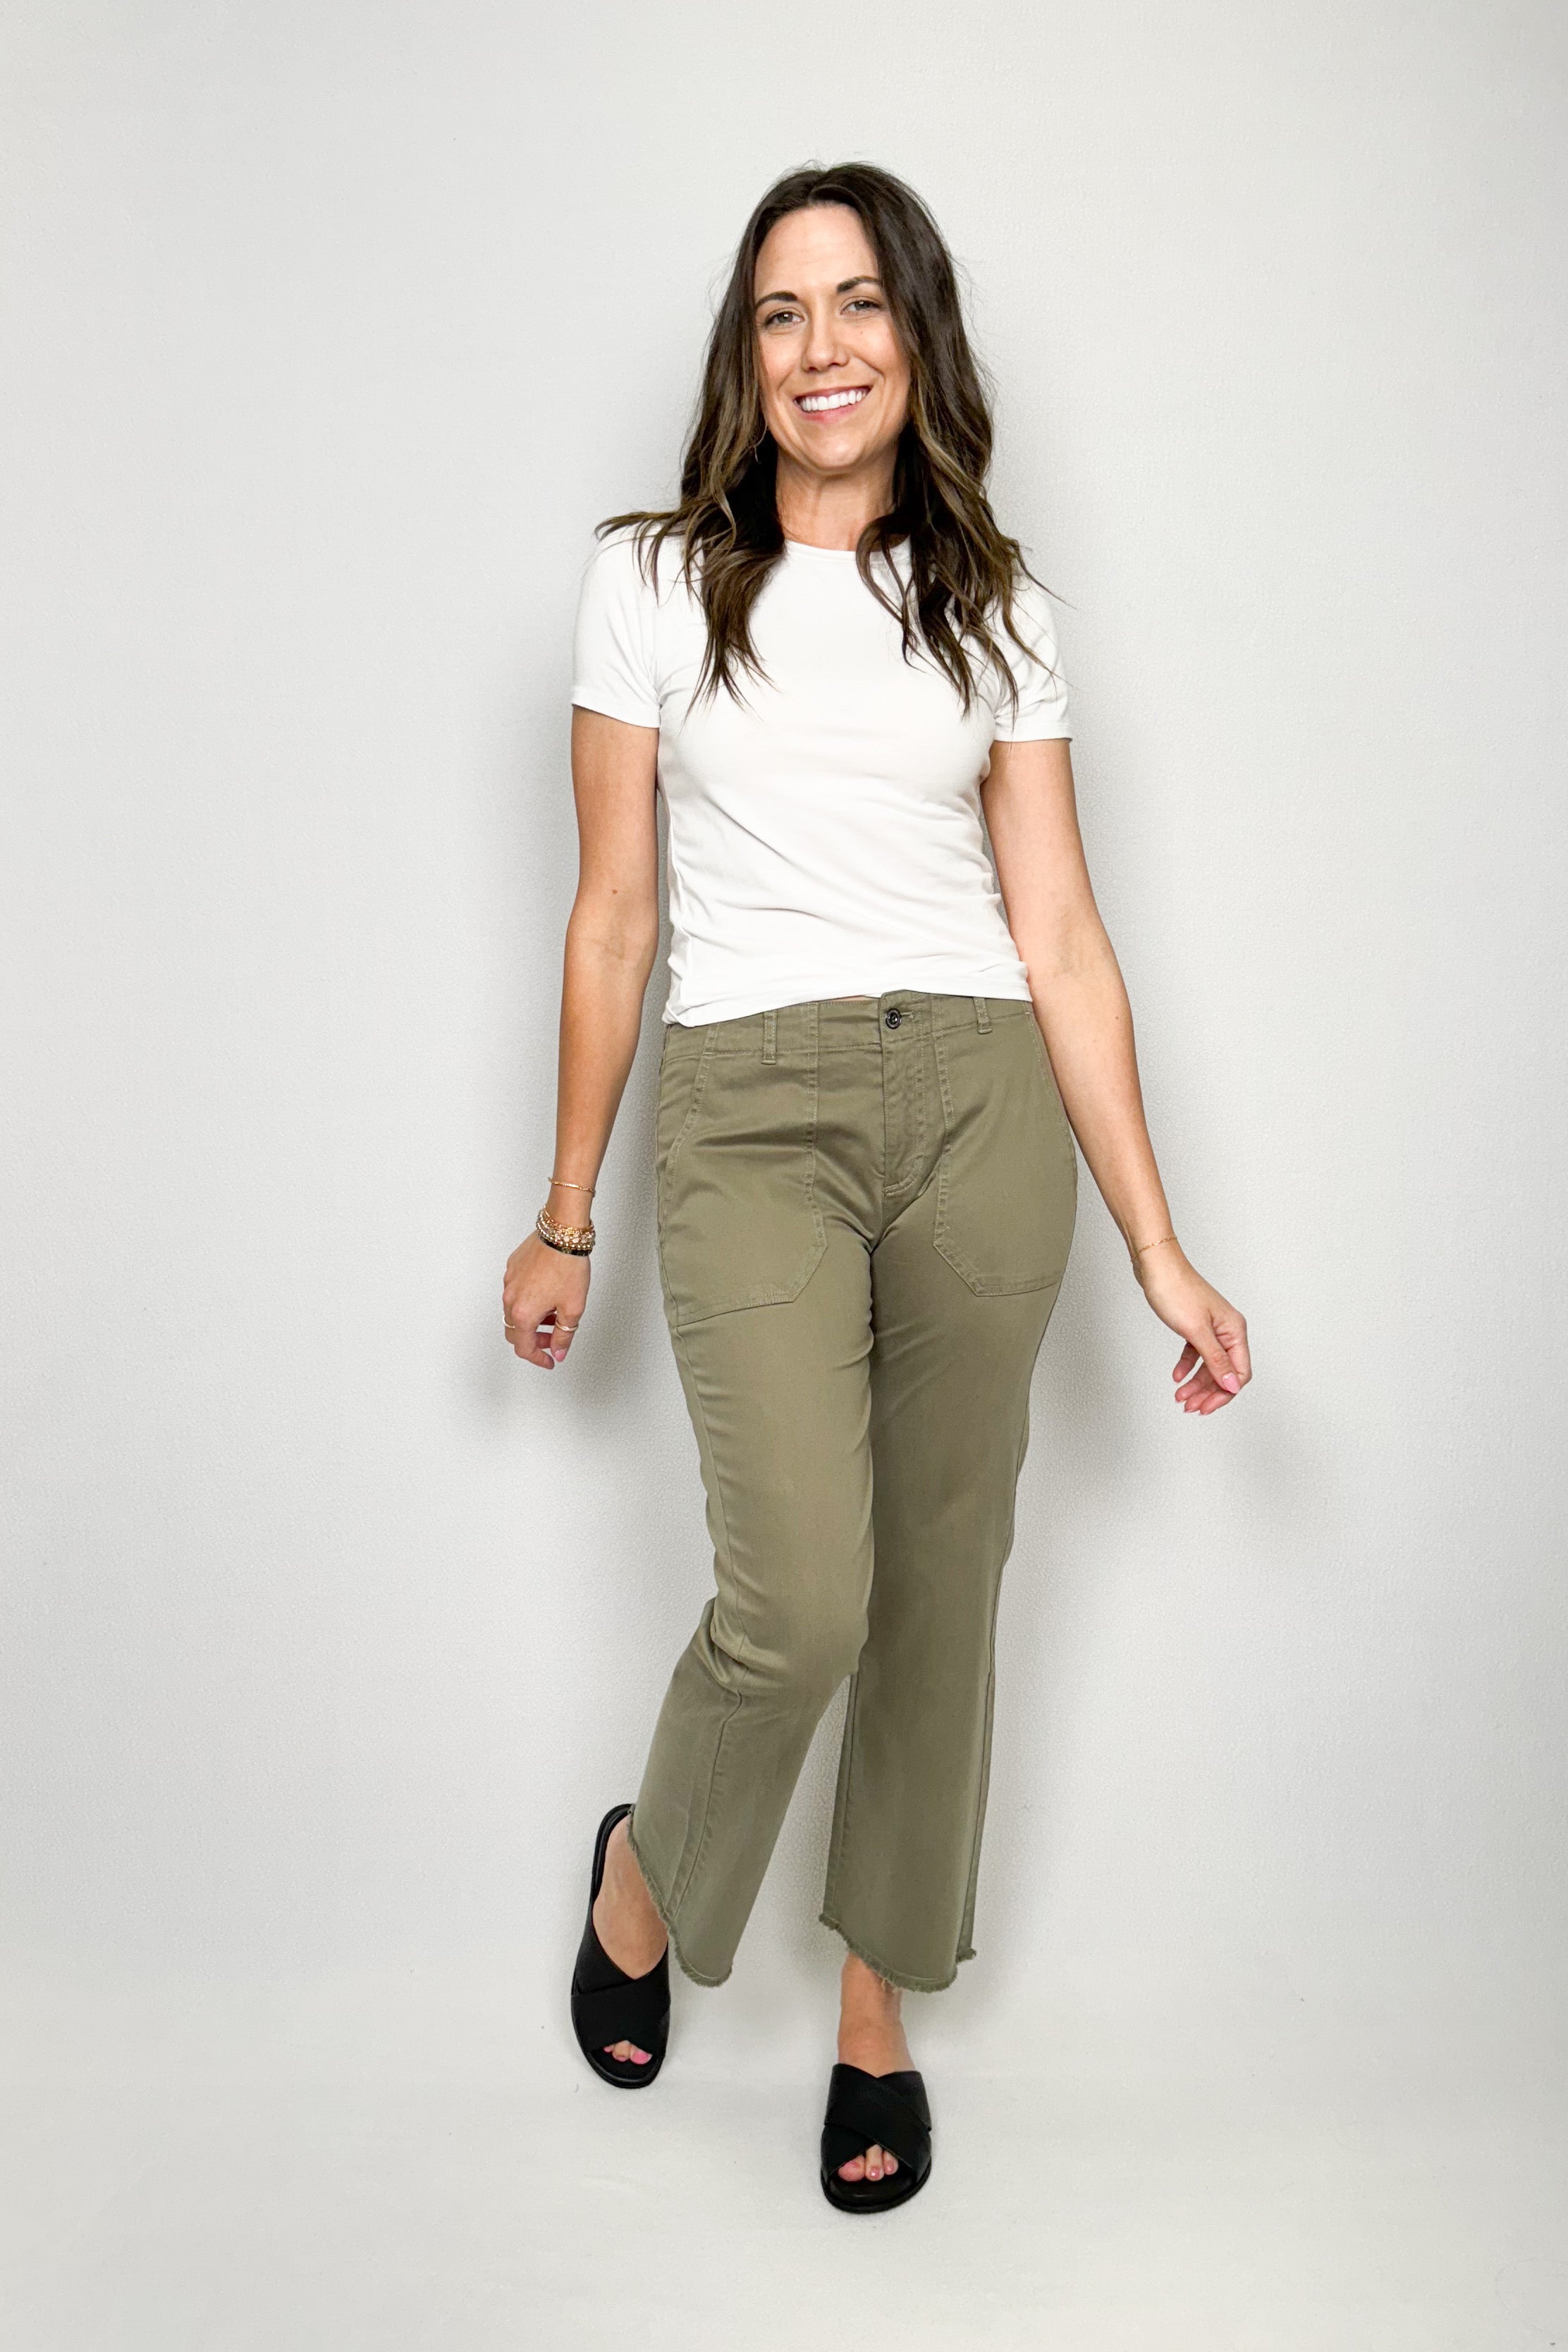 Bottoms | Jeans, Pants, Leggings, and more | Arktana